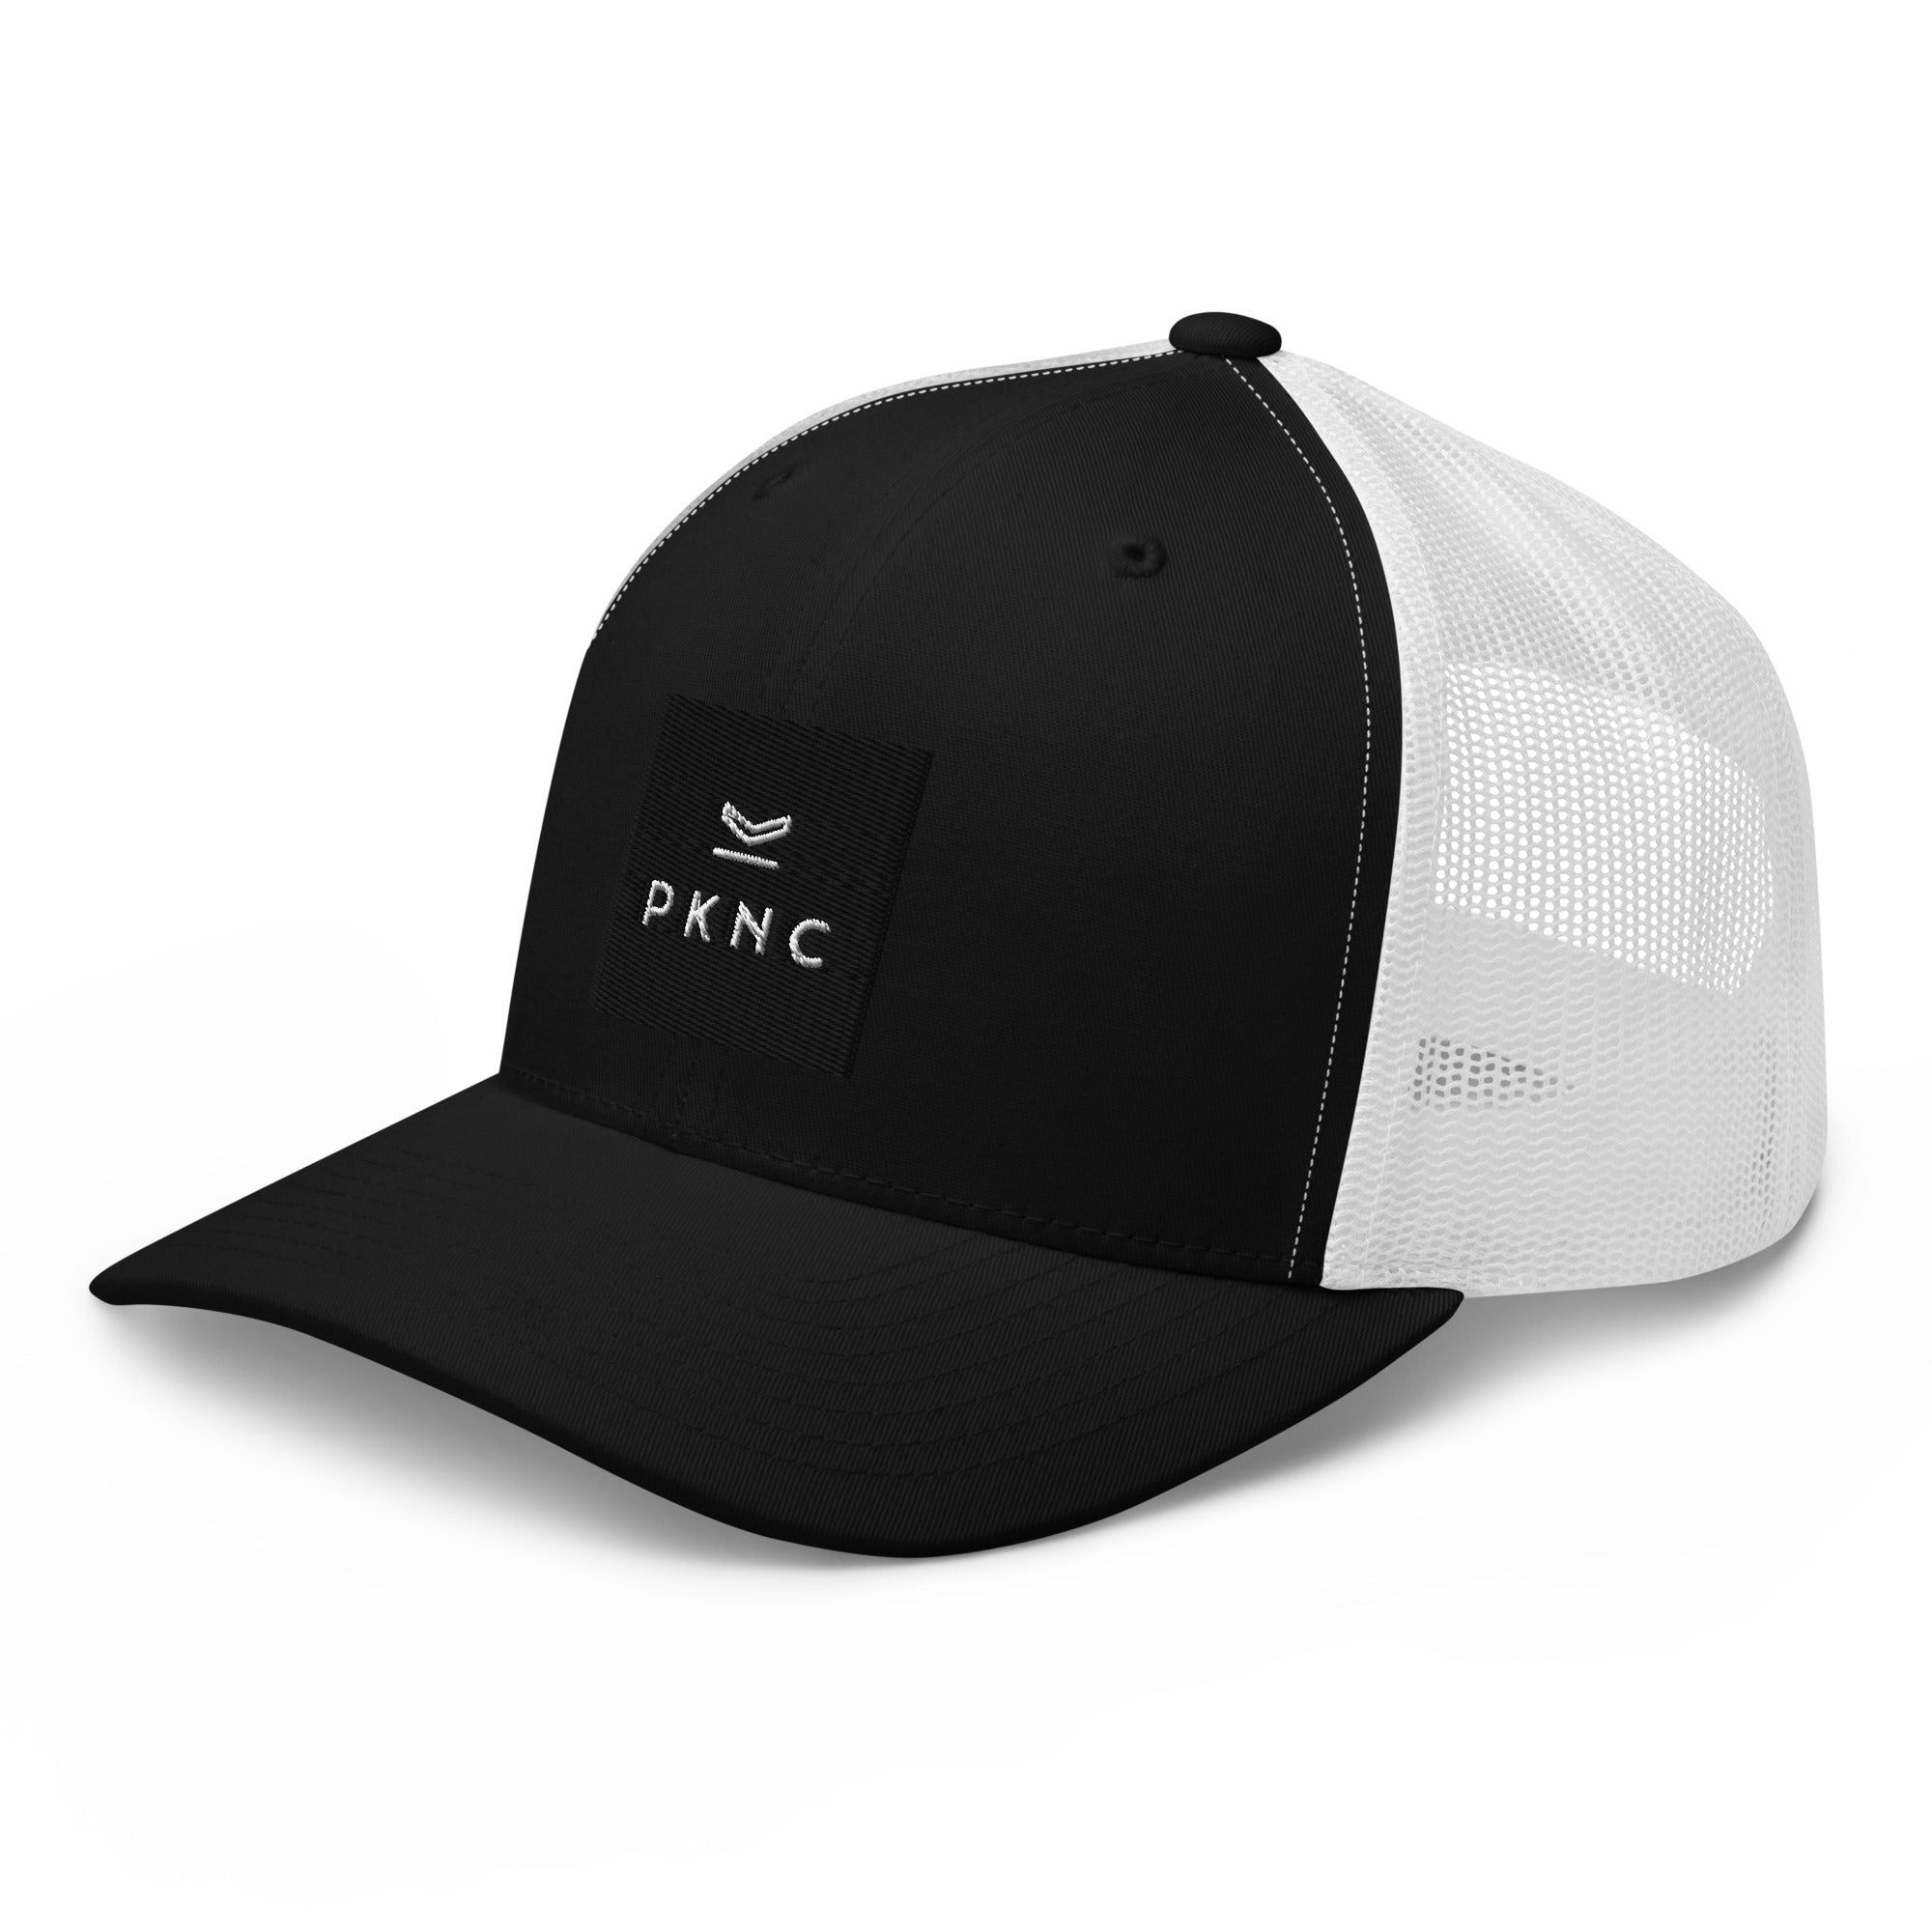 PKNC Trucker Cap